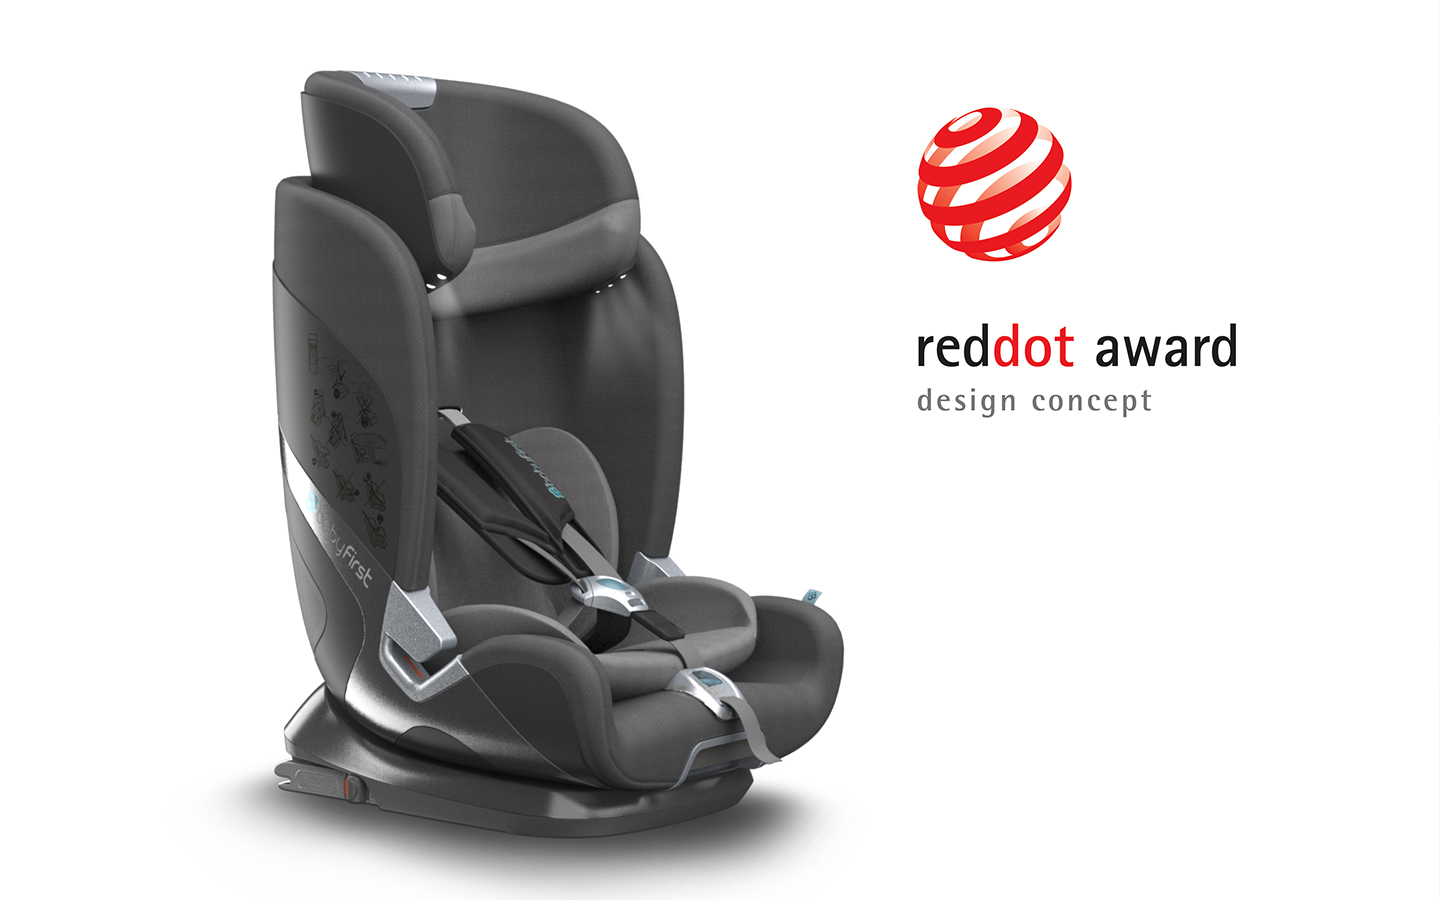 Red dot concept award winner smart baby car seat